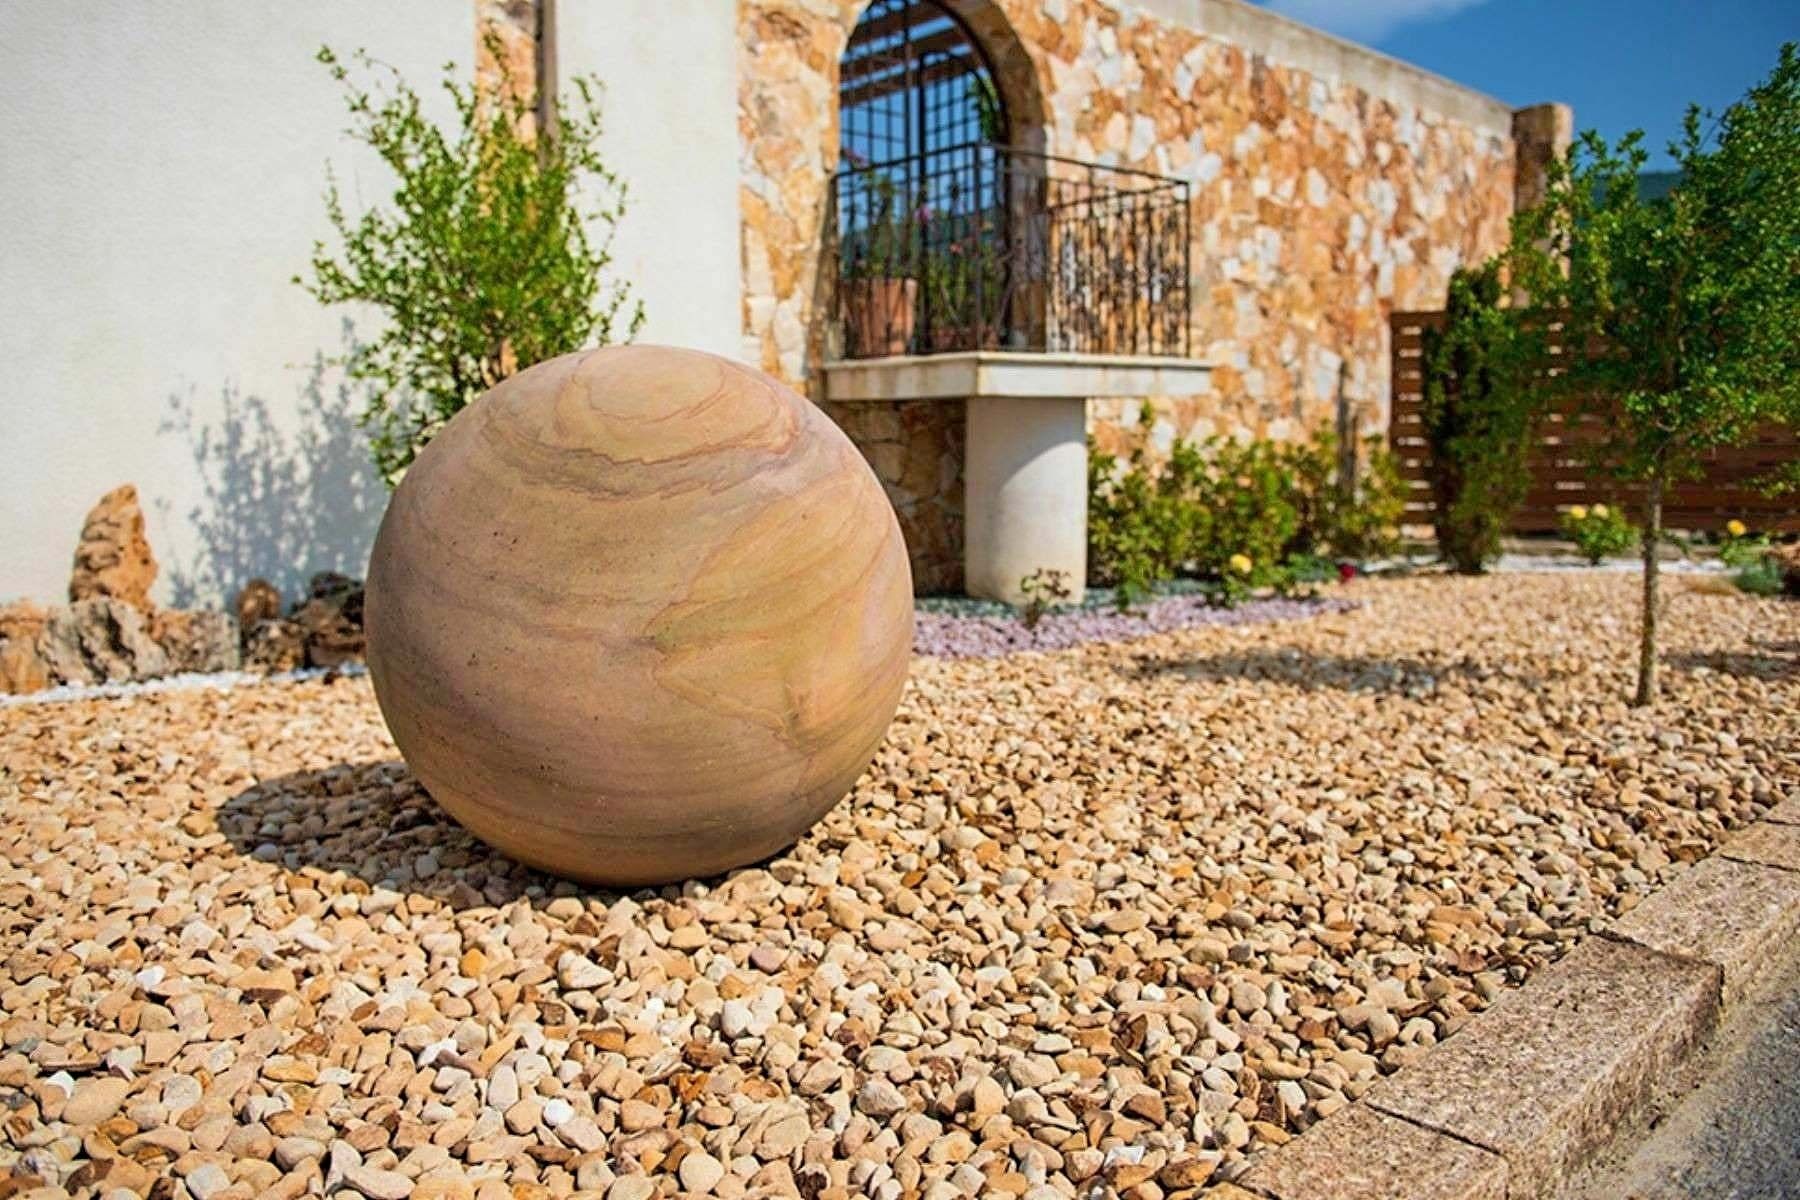 sandstone garden edging with sandstone pebbles and sandstone sculpture